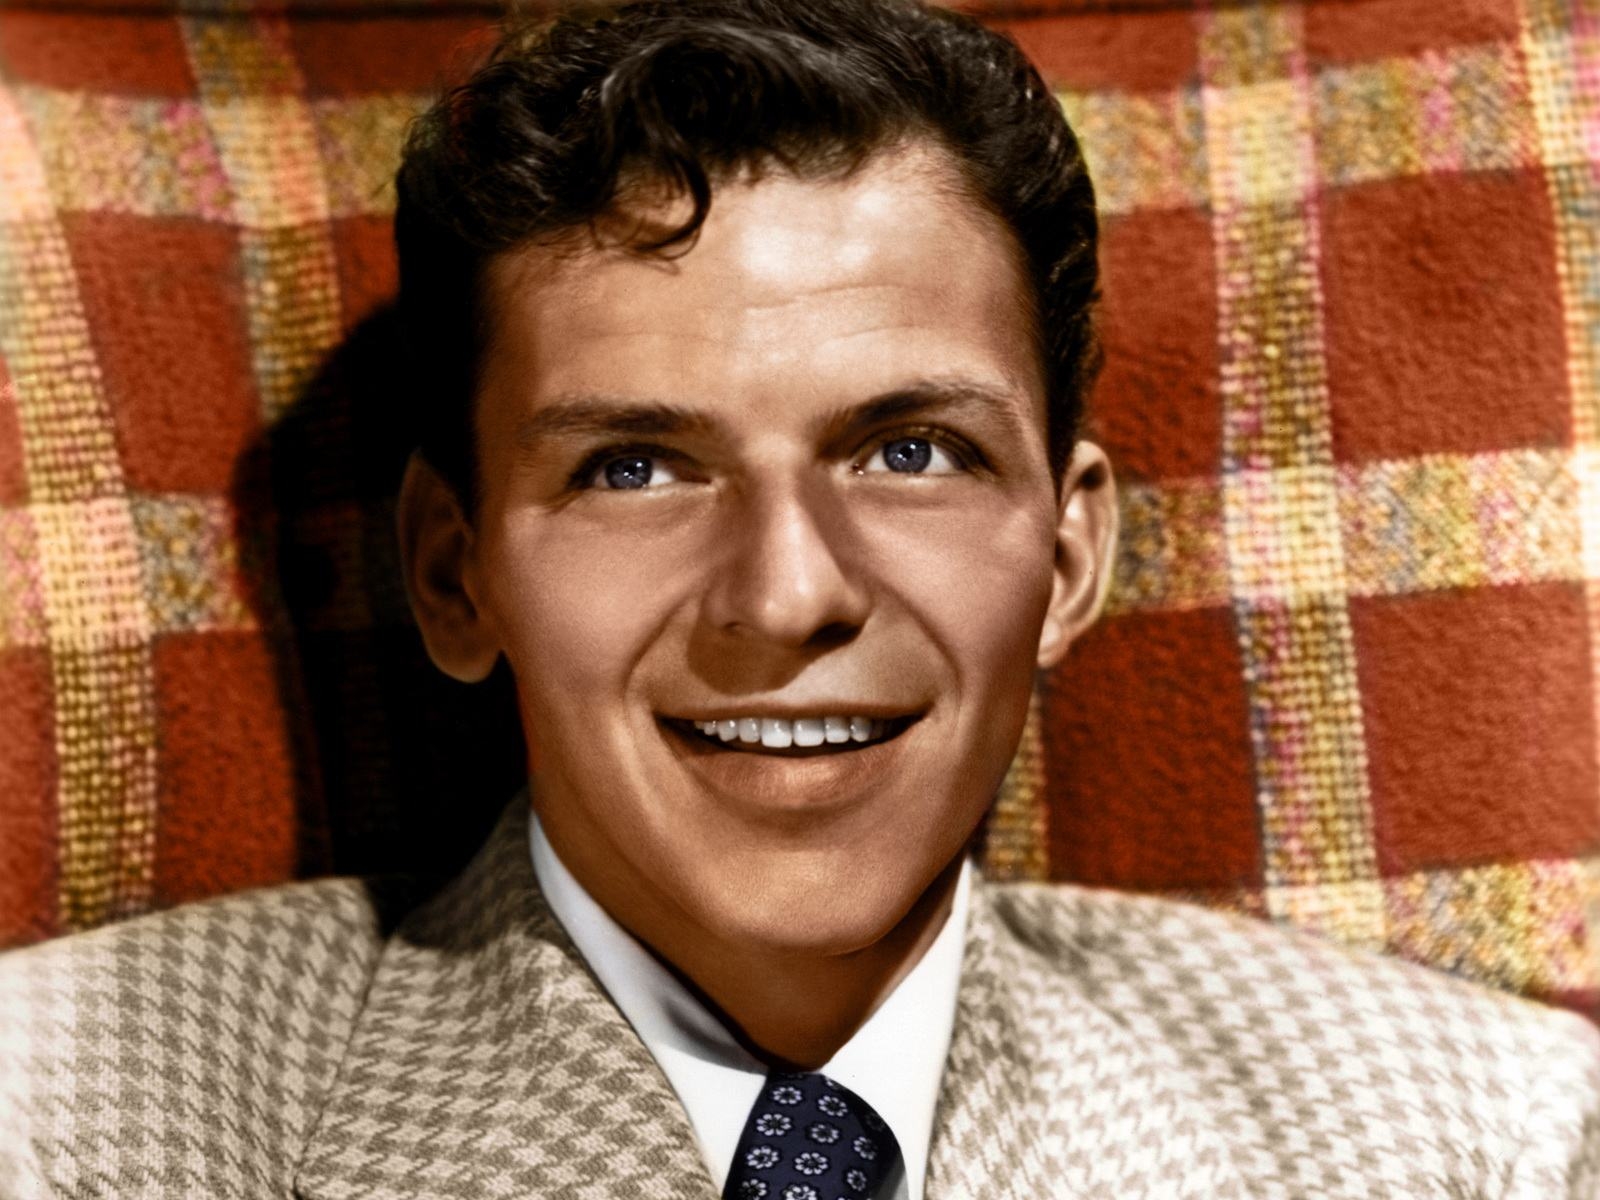 Wallpaper Background Famous Frank Sinatra Singer